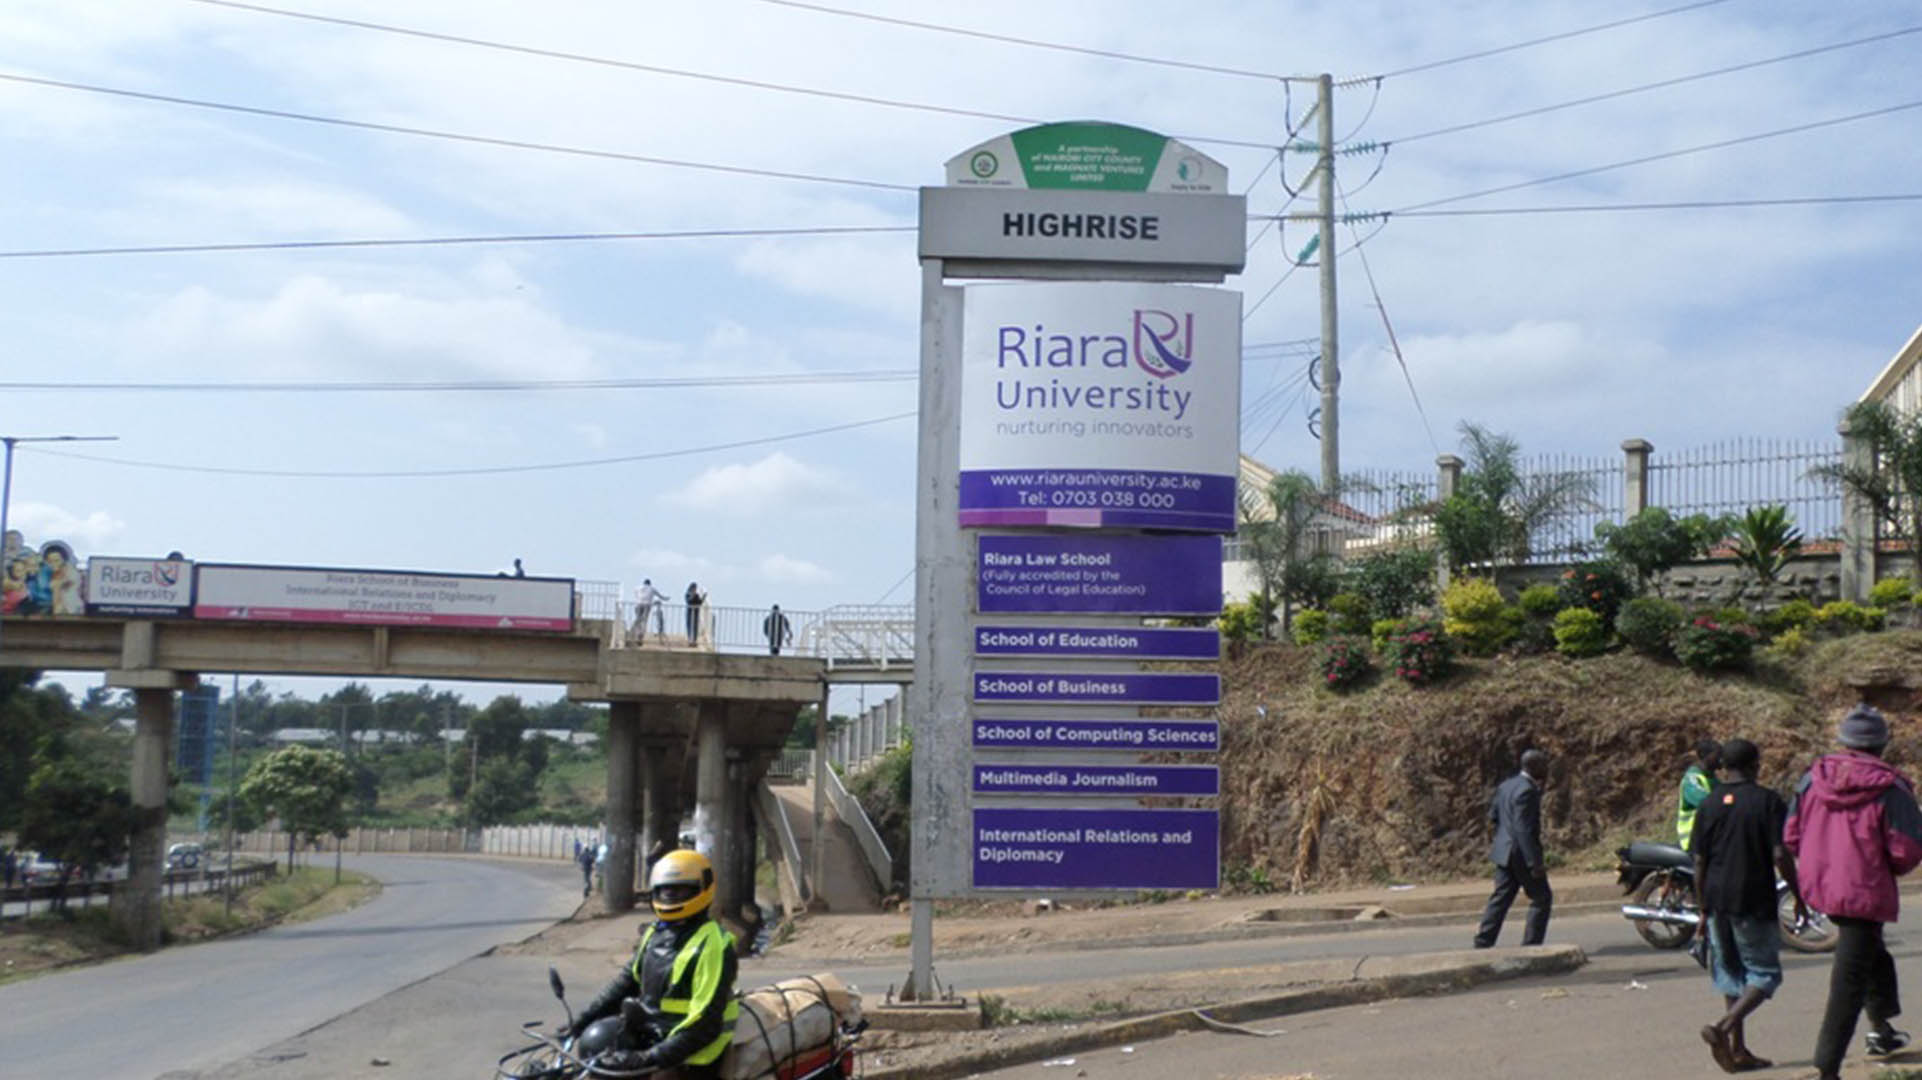 outdoor advertsing in Kenya